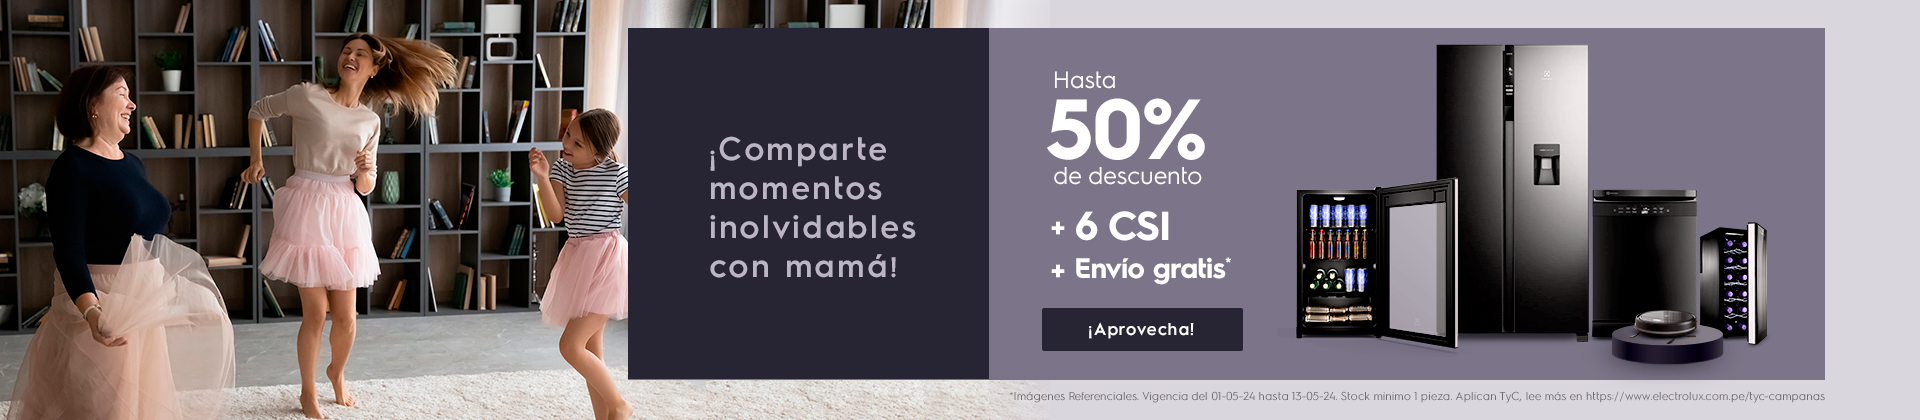 Comparte momentos inolvidables con mamá - Electrolux hasta 50% de descuento + 6CSI + Envío Gratis. 